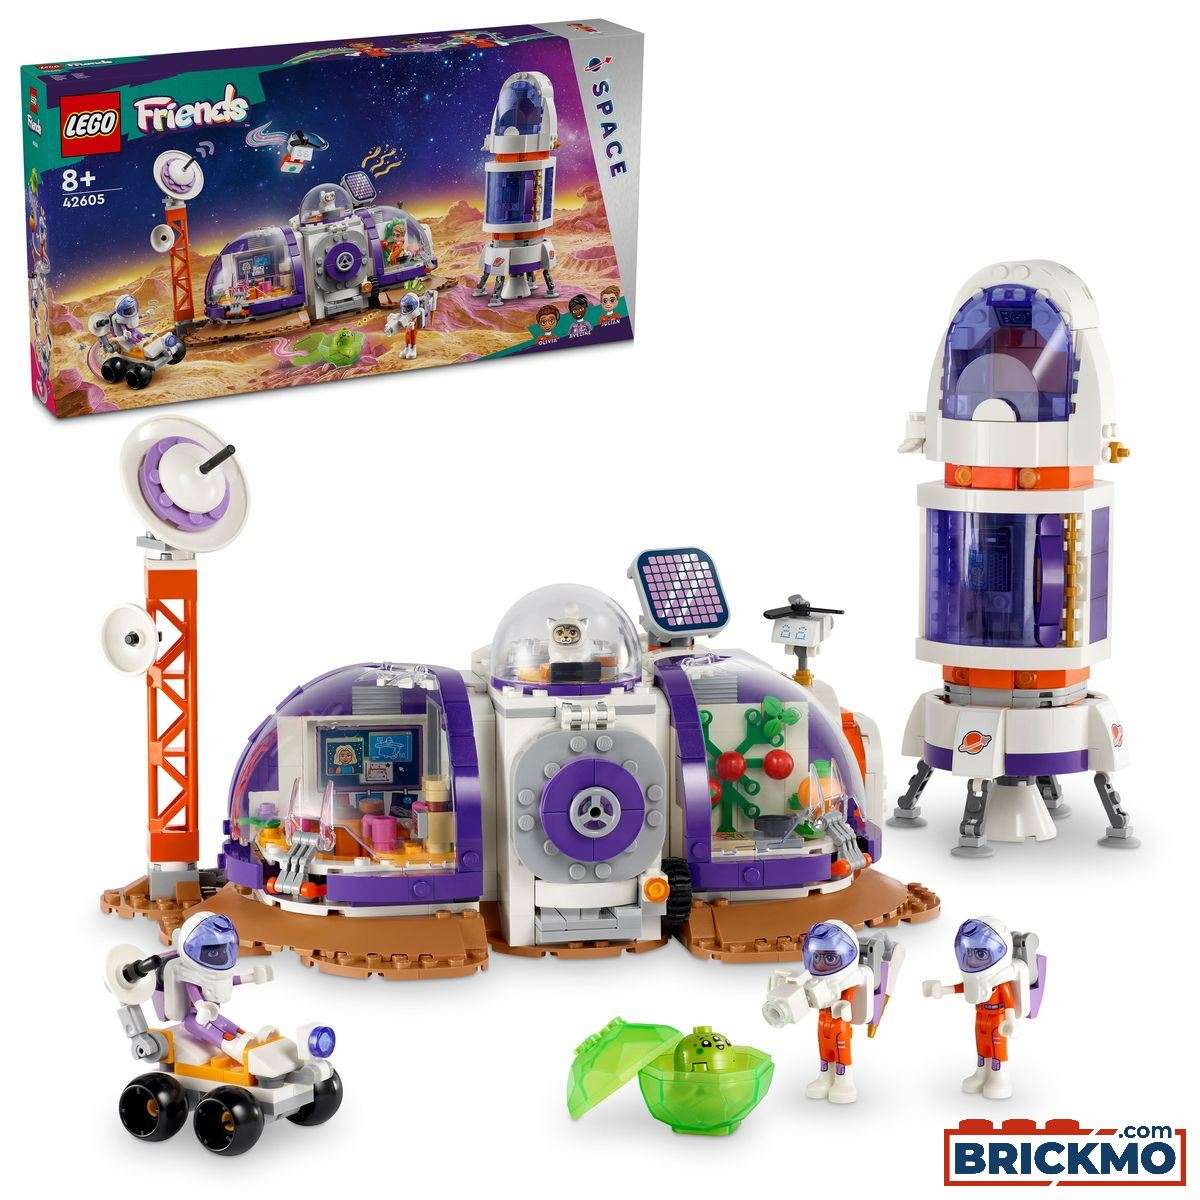 LEGO Friends 42605 Mars-Raumbasis mit Rakete 42605